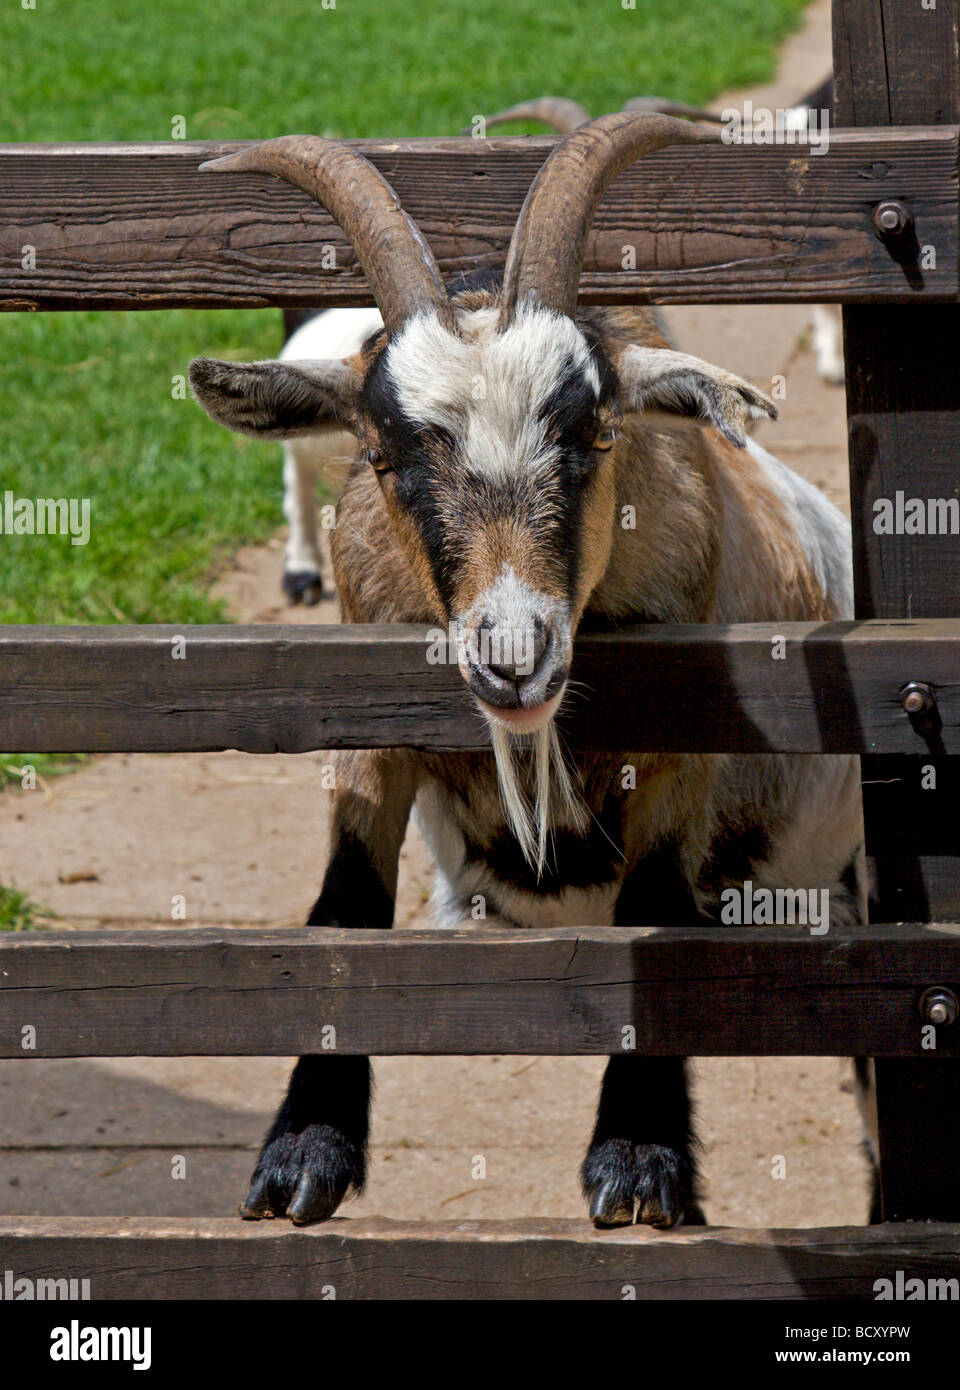 Ziege mit Kopf durch Zaun, UK Stockfoto